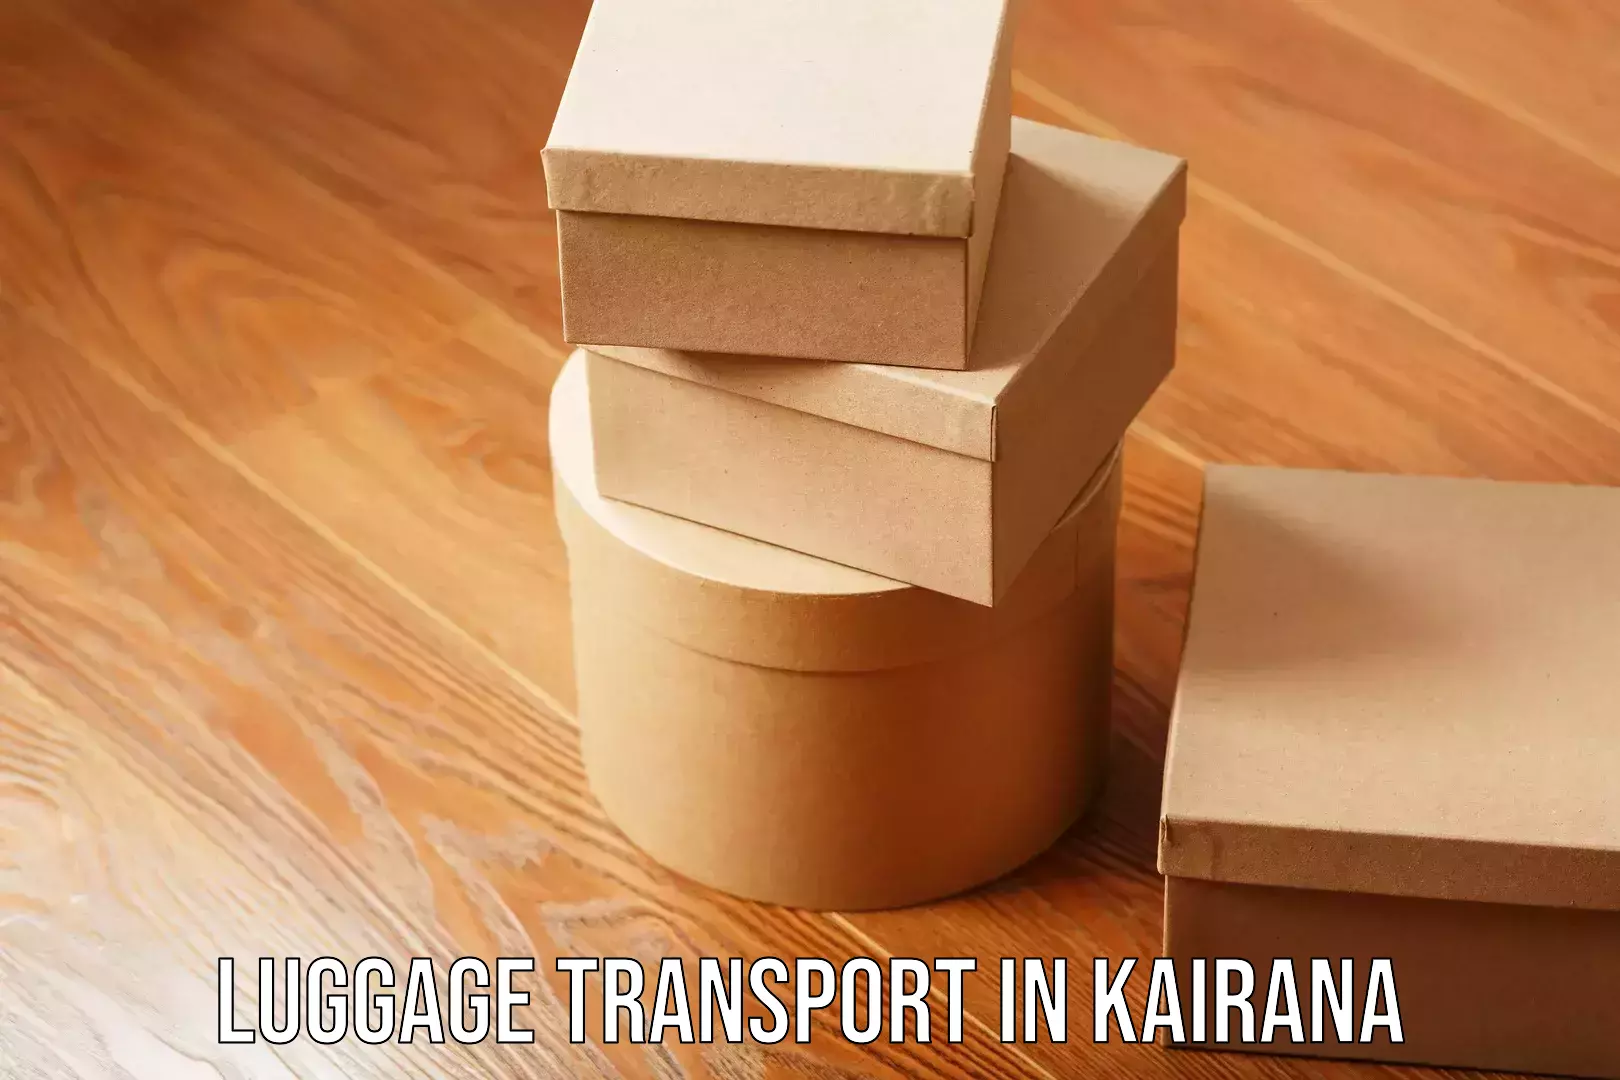 Luggage transport deals in Kairana